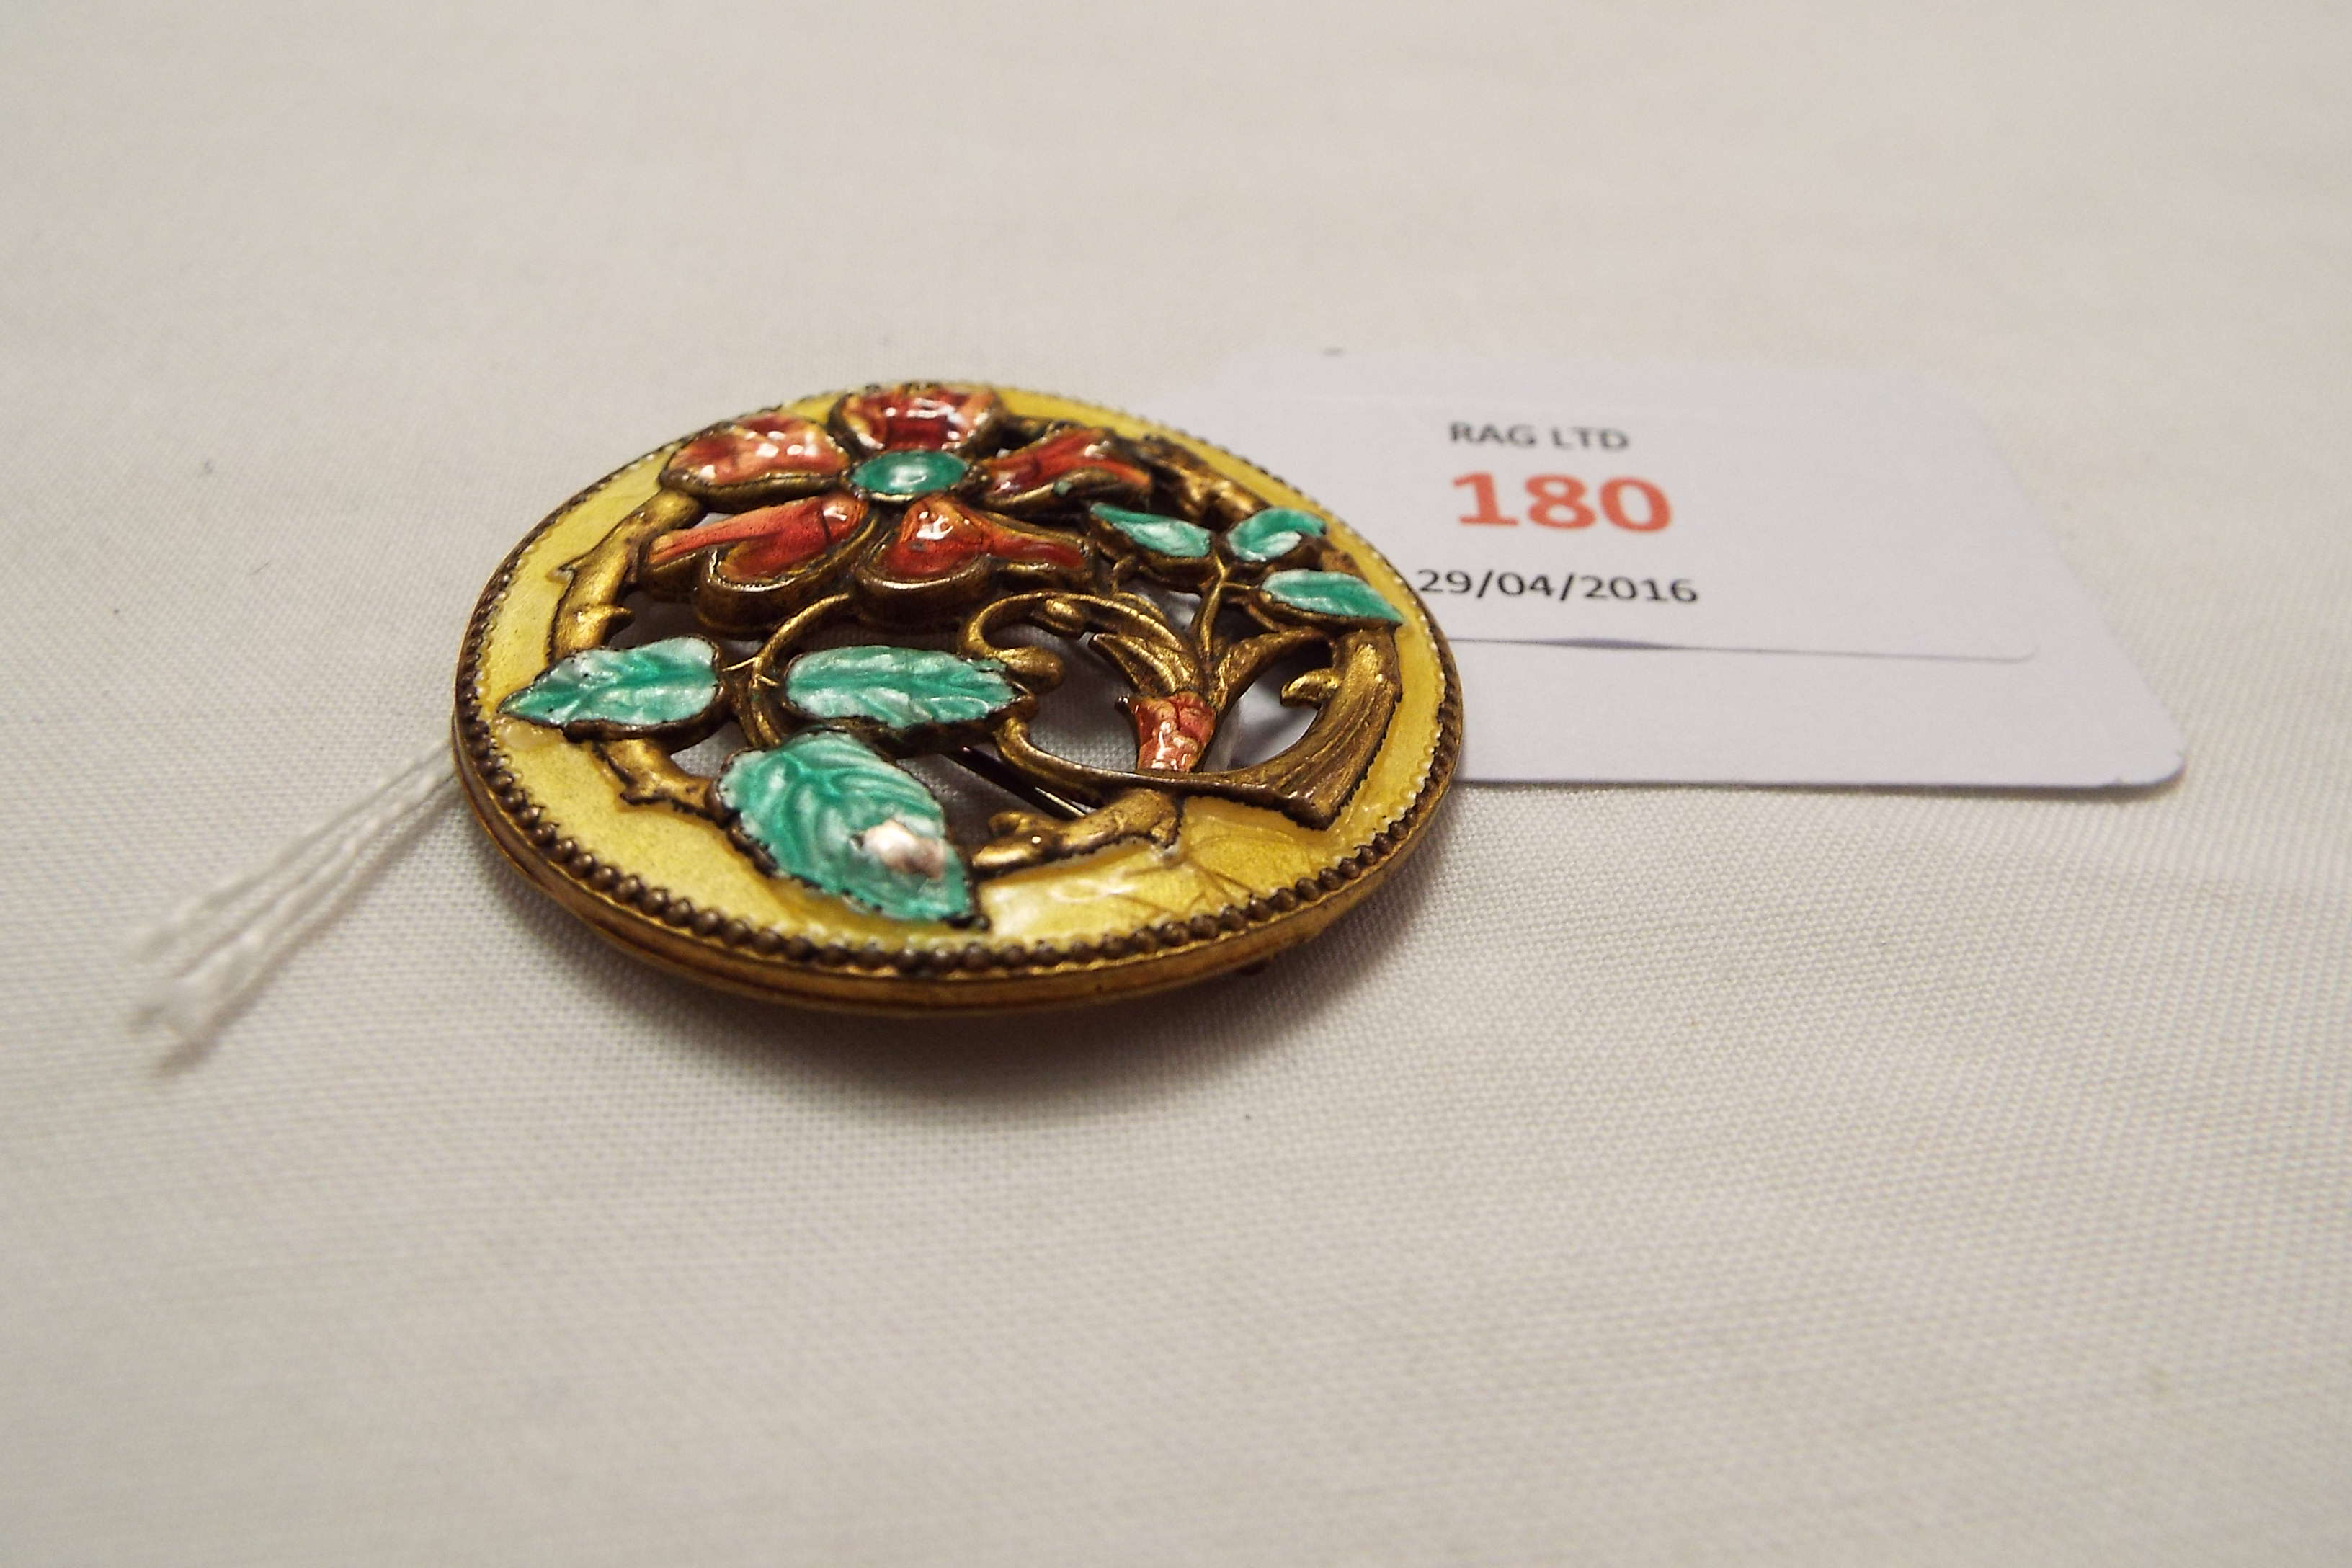 A gilt metal Art Nouveau brooch with enamelled floral design